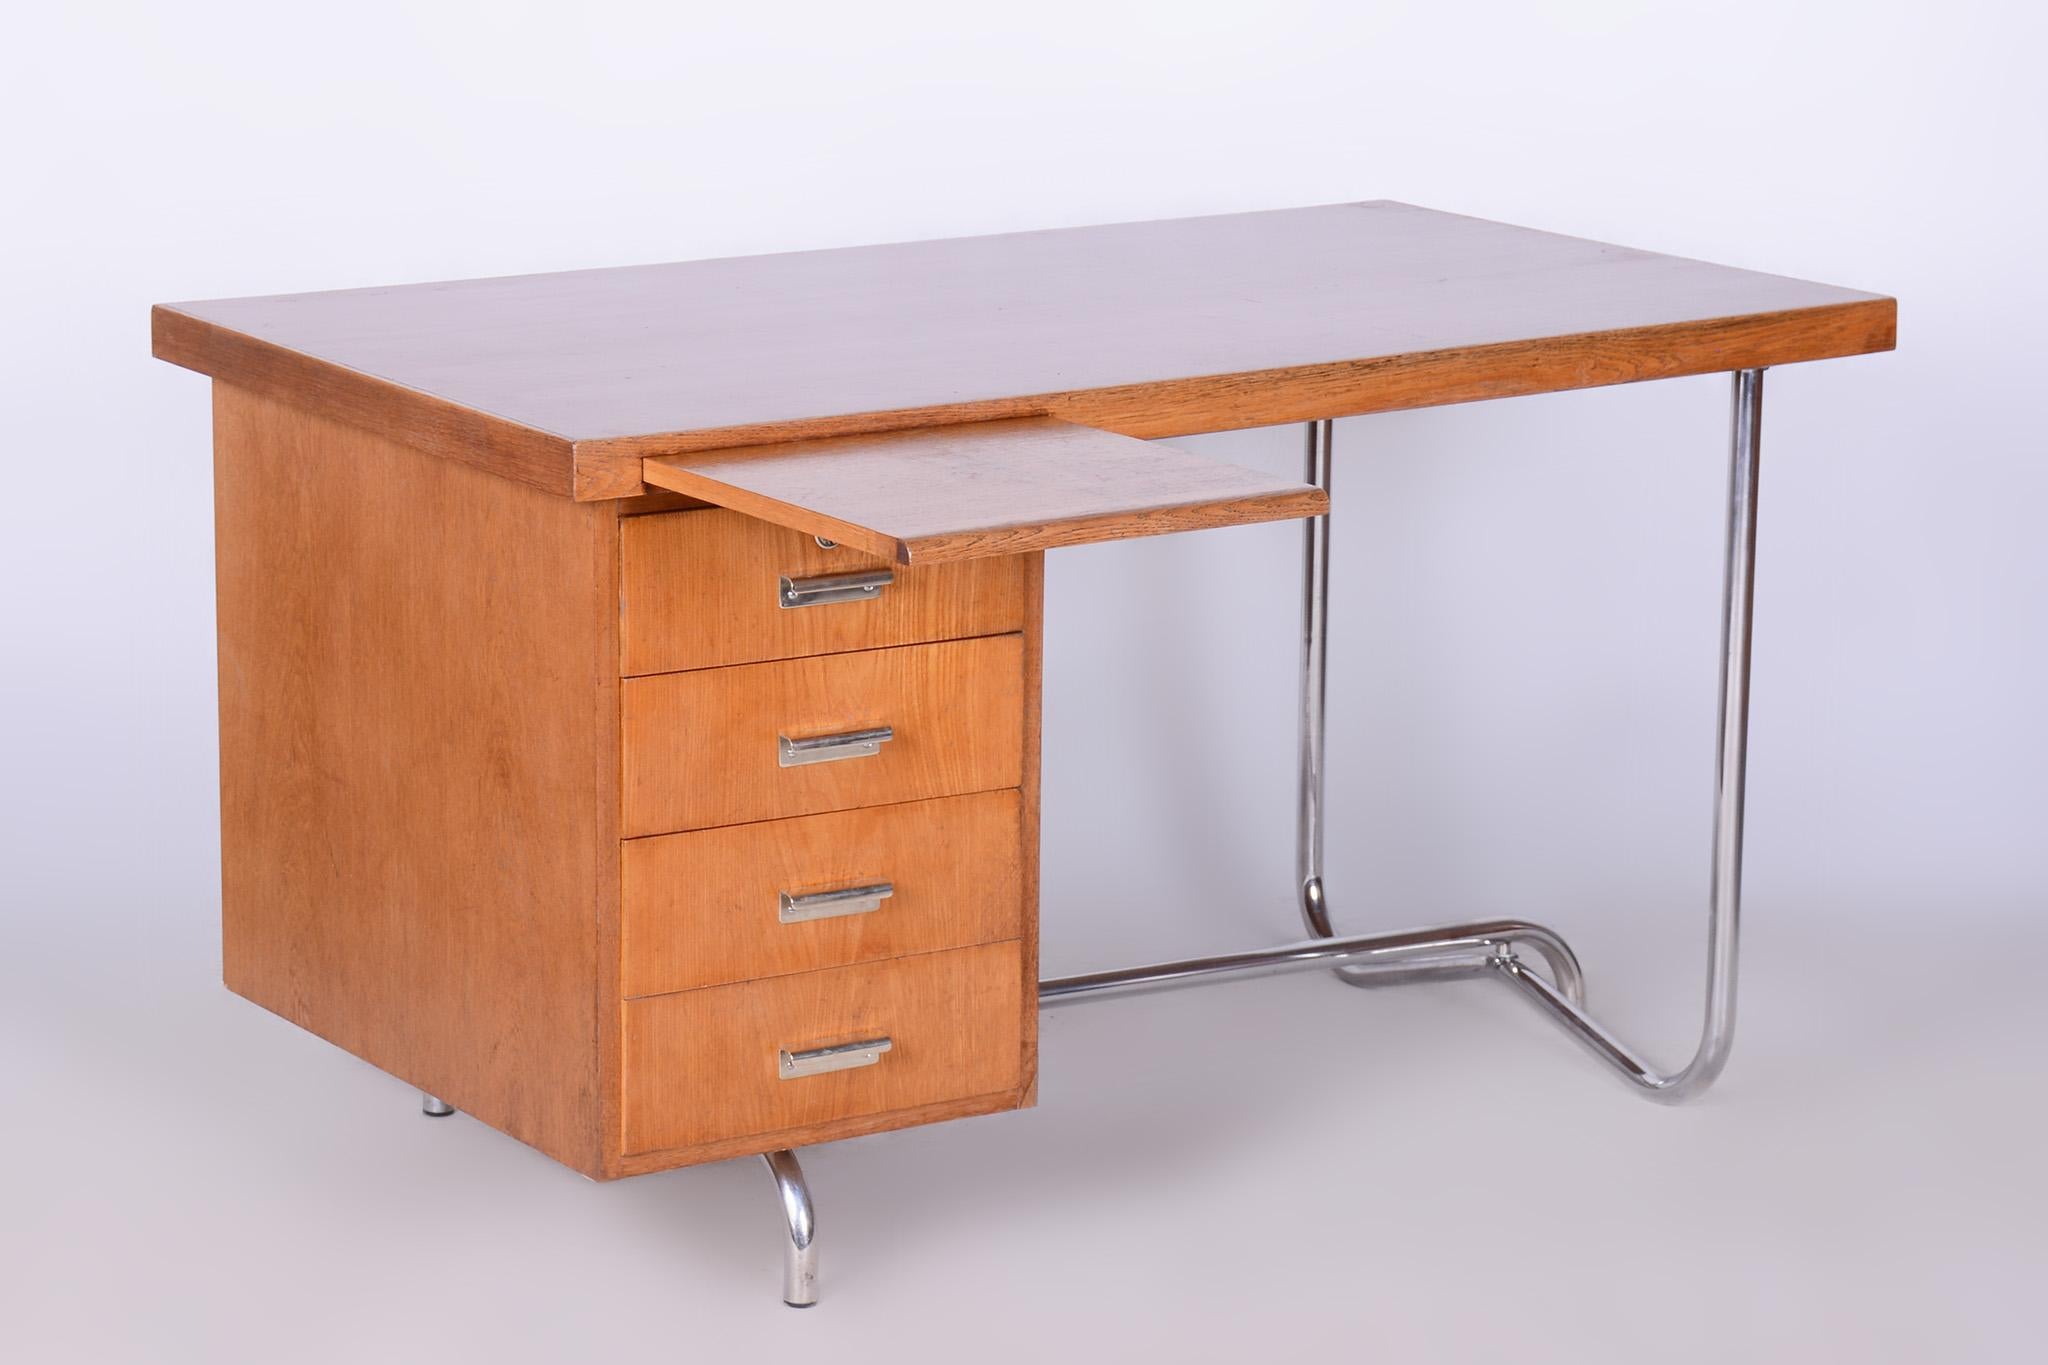 Restored Pair of Oak Writing Desks, Hynek Gottwald, Chrome, Czechia, 1930s For Sale 1